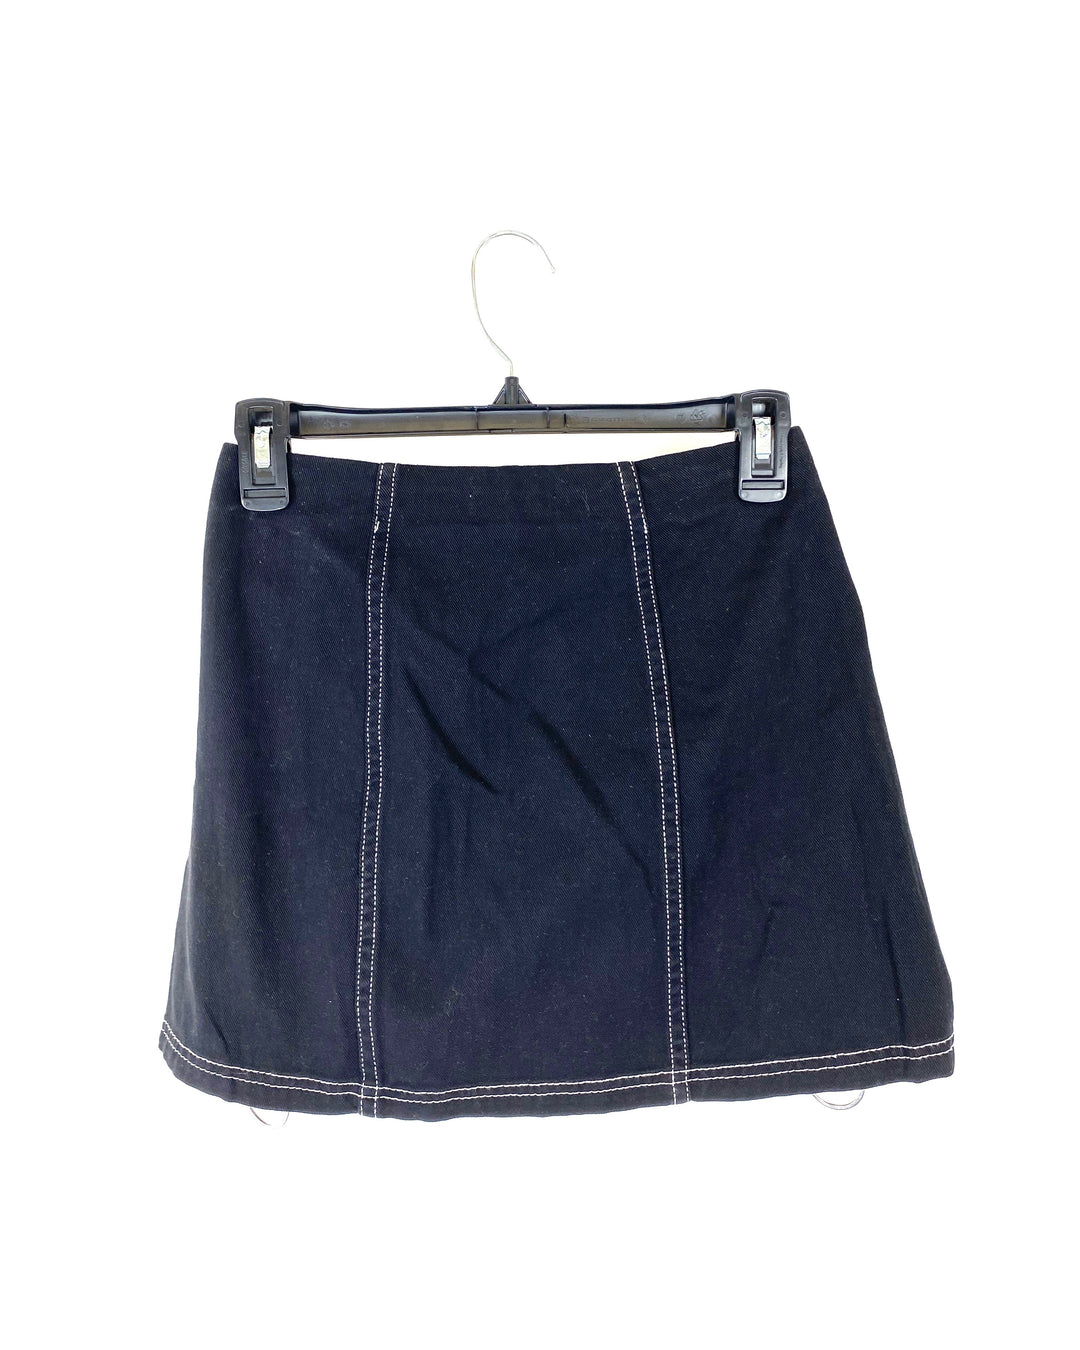 Black Denim Mini Skirt - Extra Small